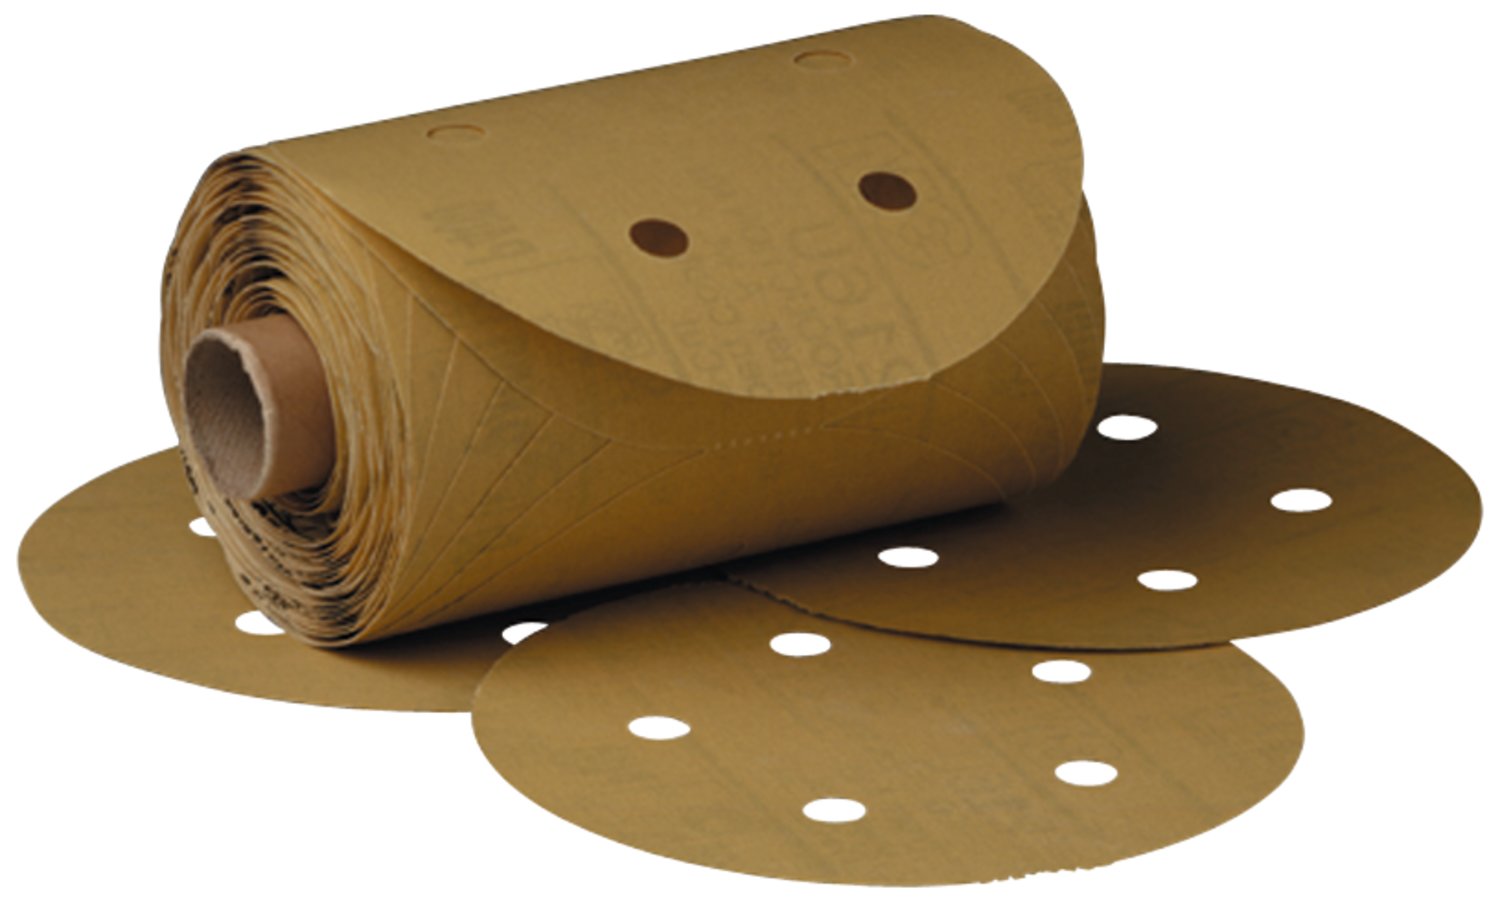 7010361690 - 3M Stikit Gold Disc Roll Dust Free, 01642, 6 in, P100, 125 discs per
roll, 10 rolls per case